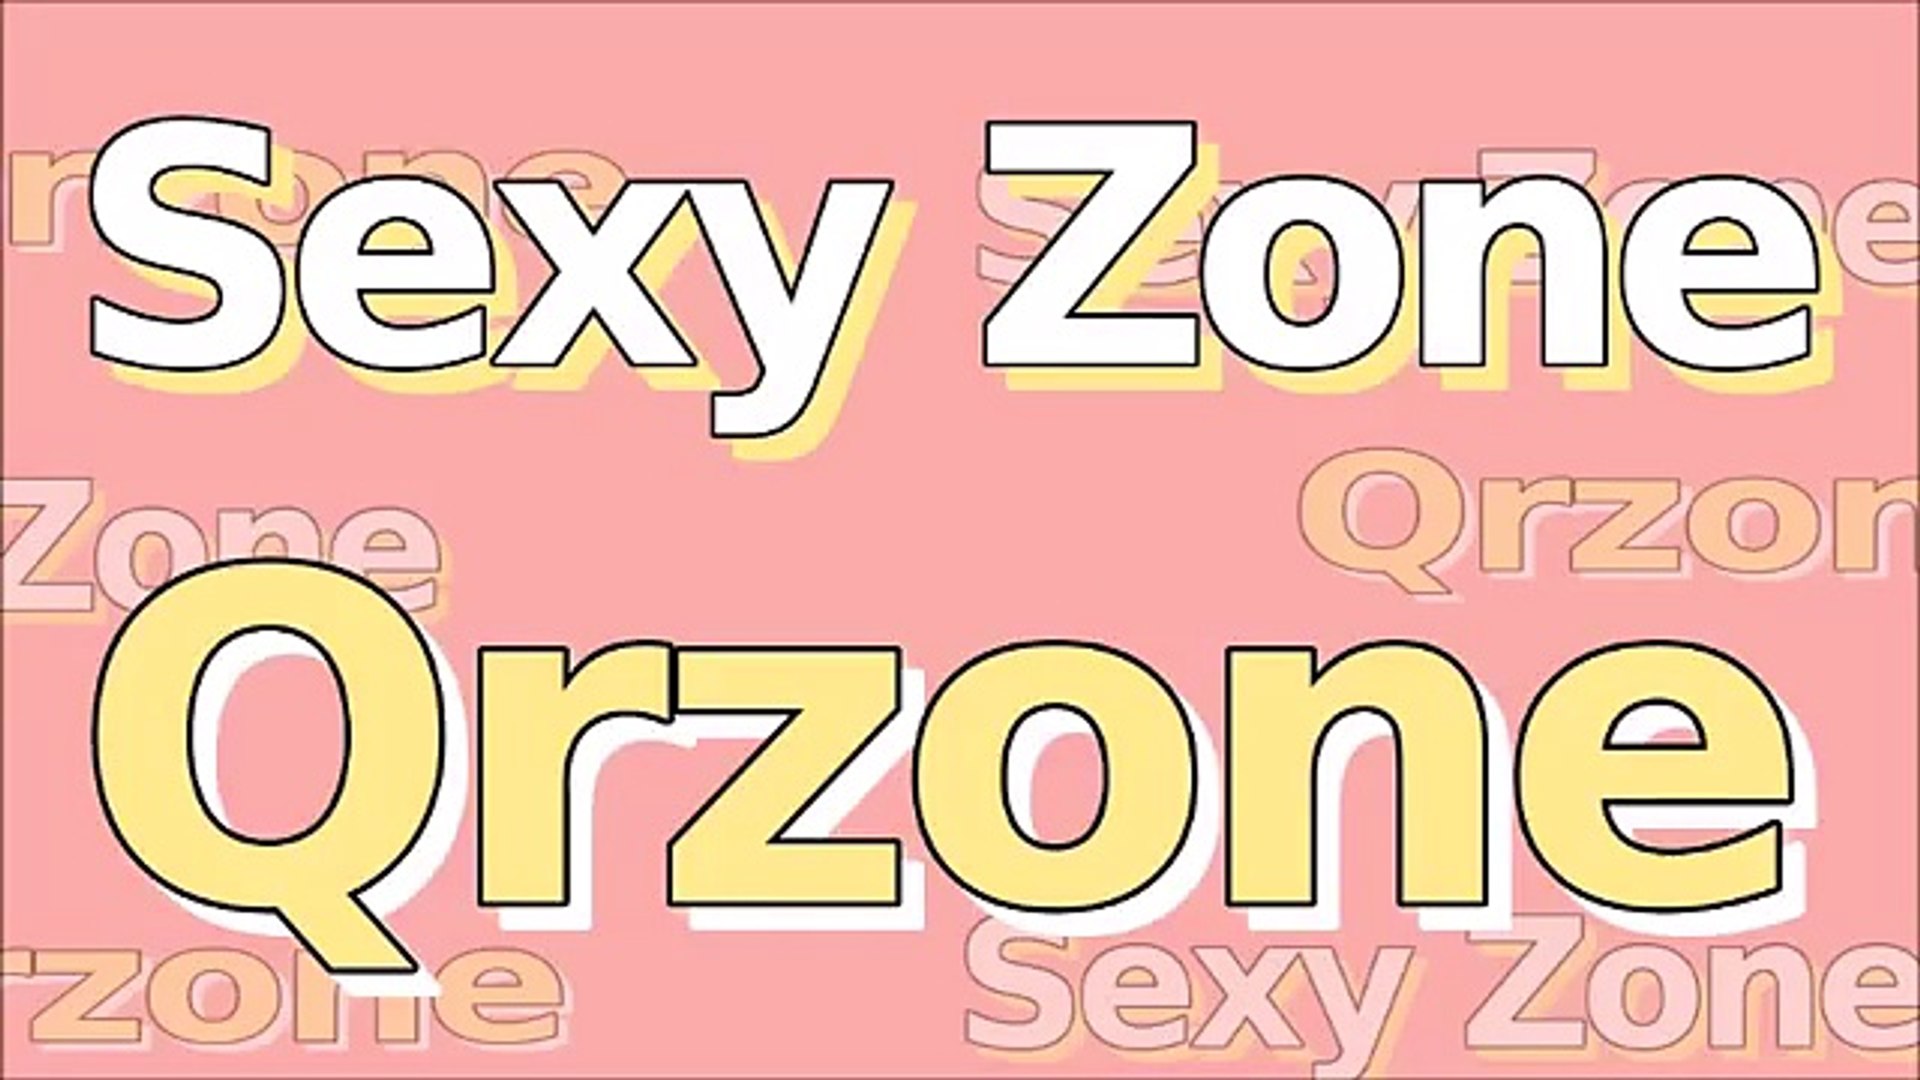 Sexy Zone の Qrzone 15年12月3日 松島聡 マリウス葉 5人でお風呂入ったね Dailymotion Video